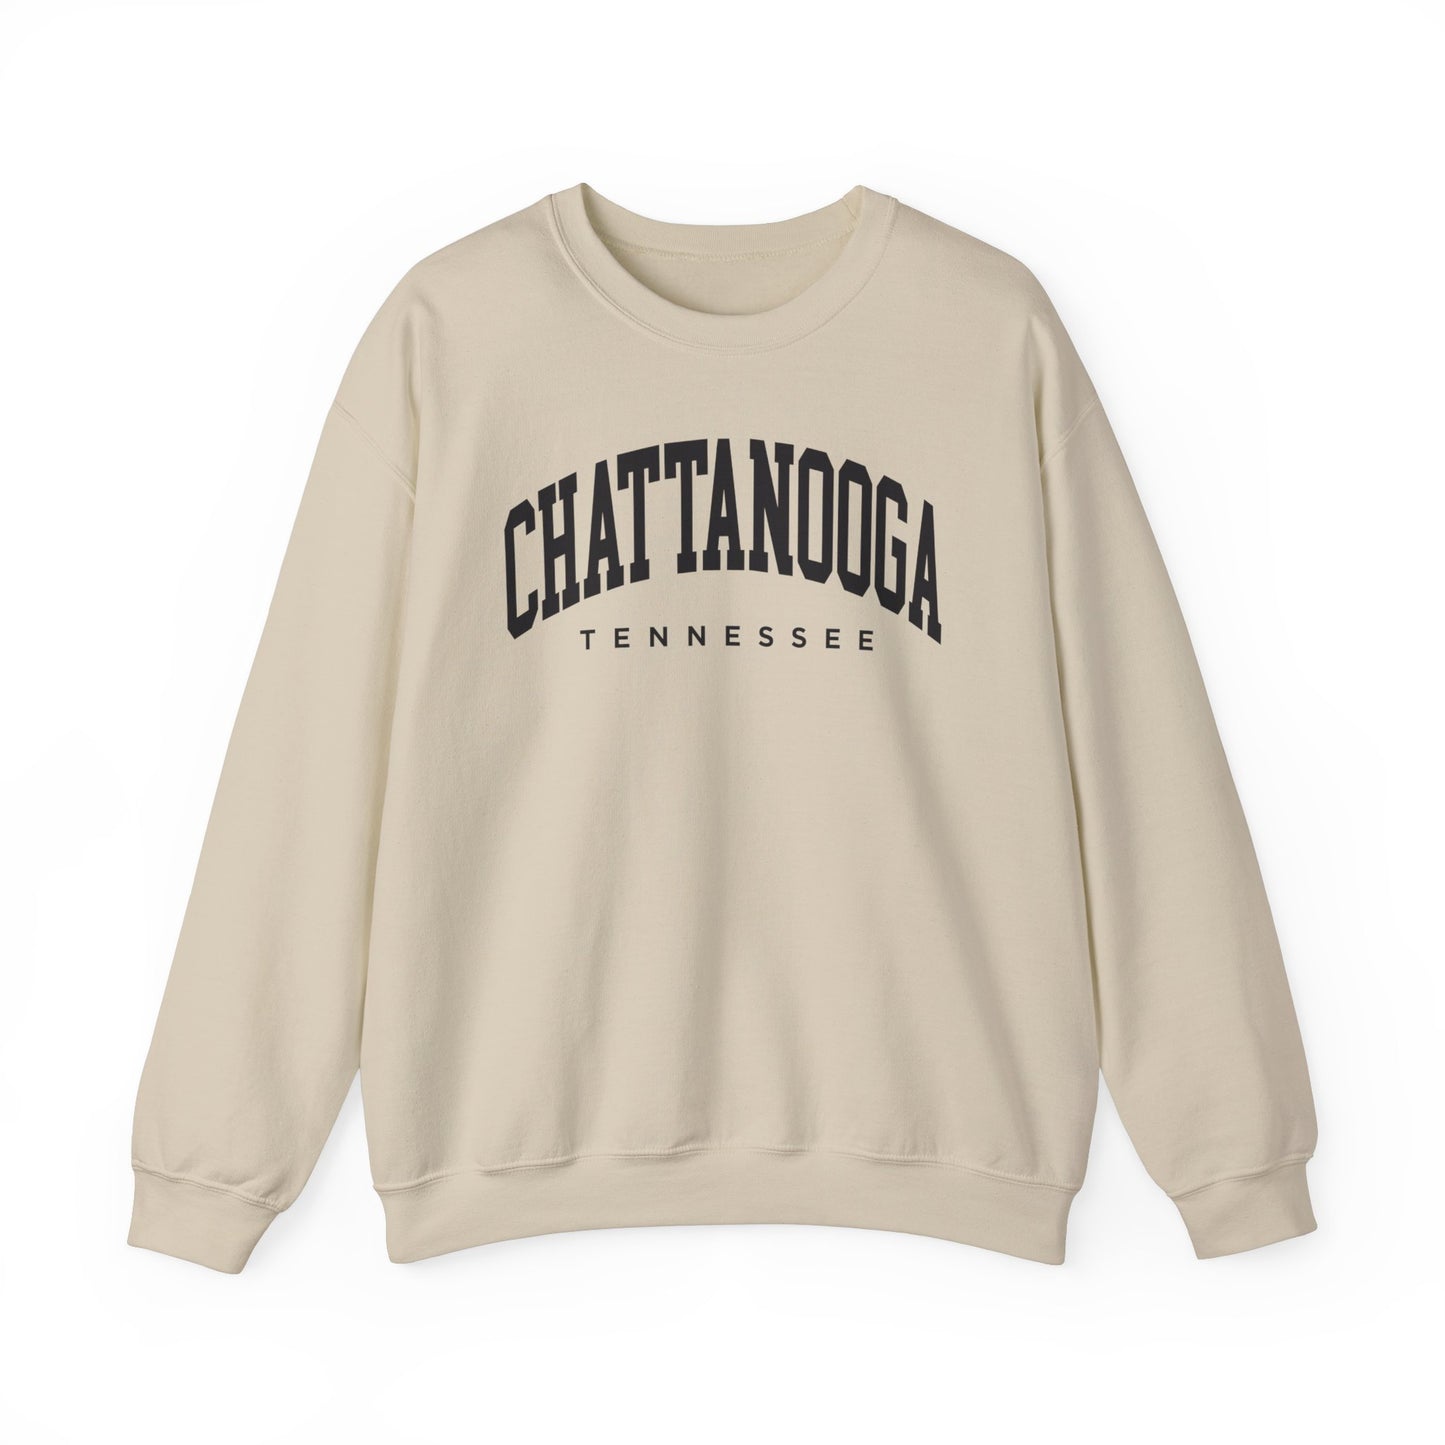 Chattanooga Tennessee Sweatshirt